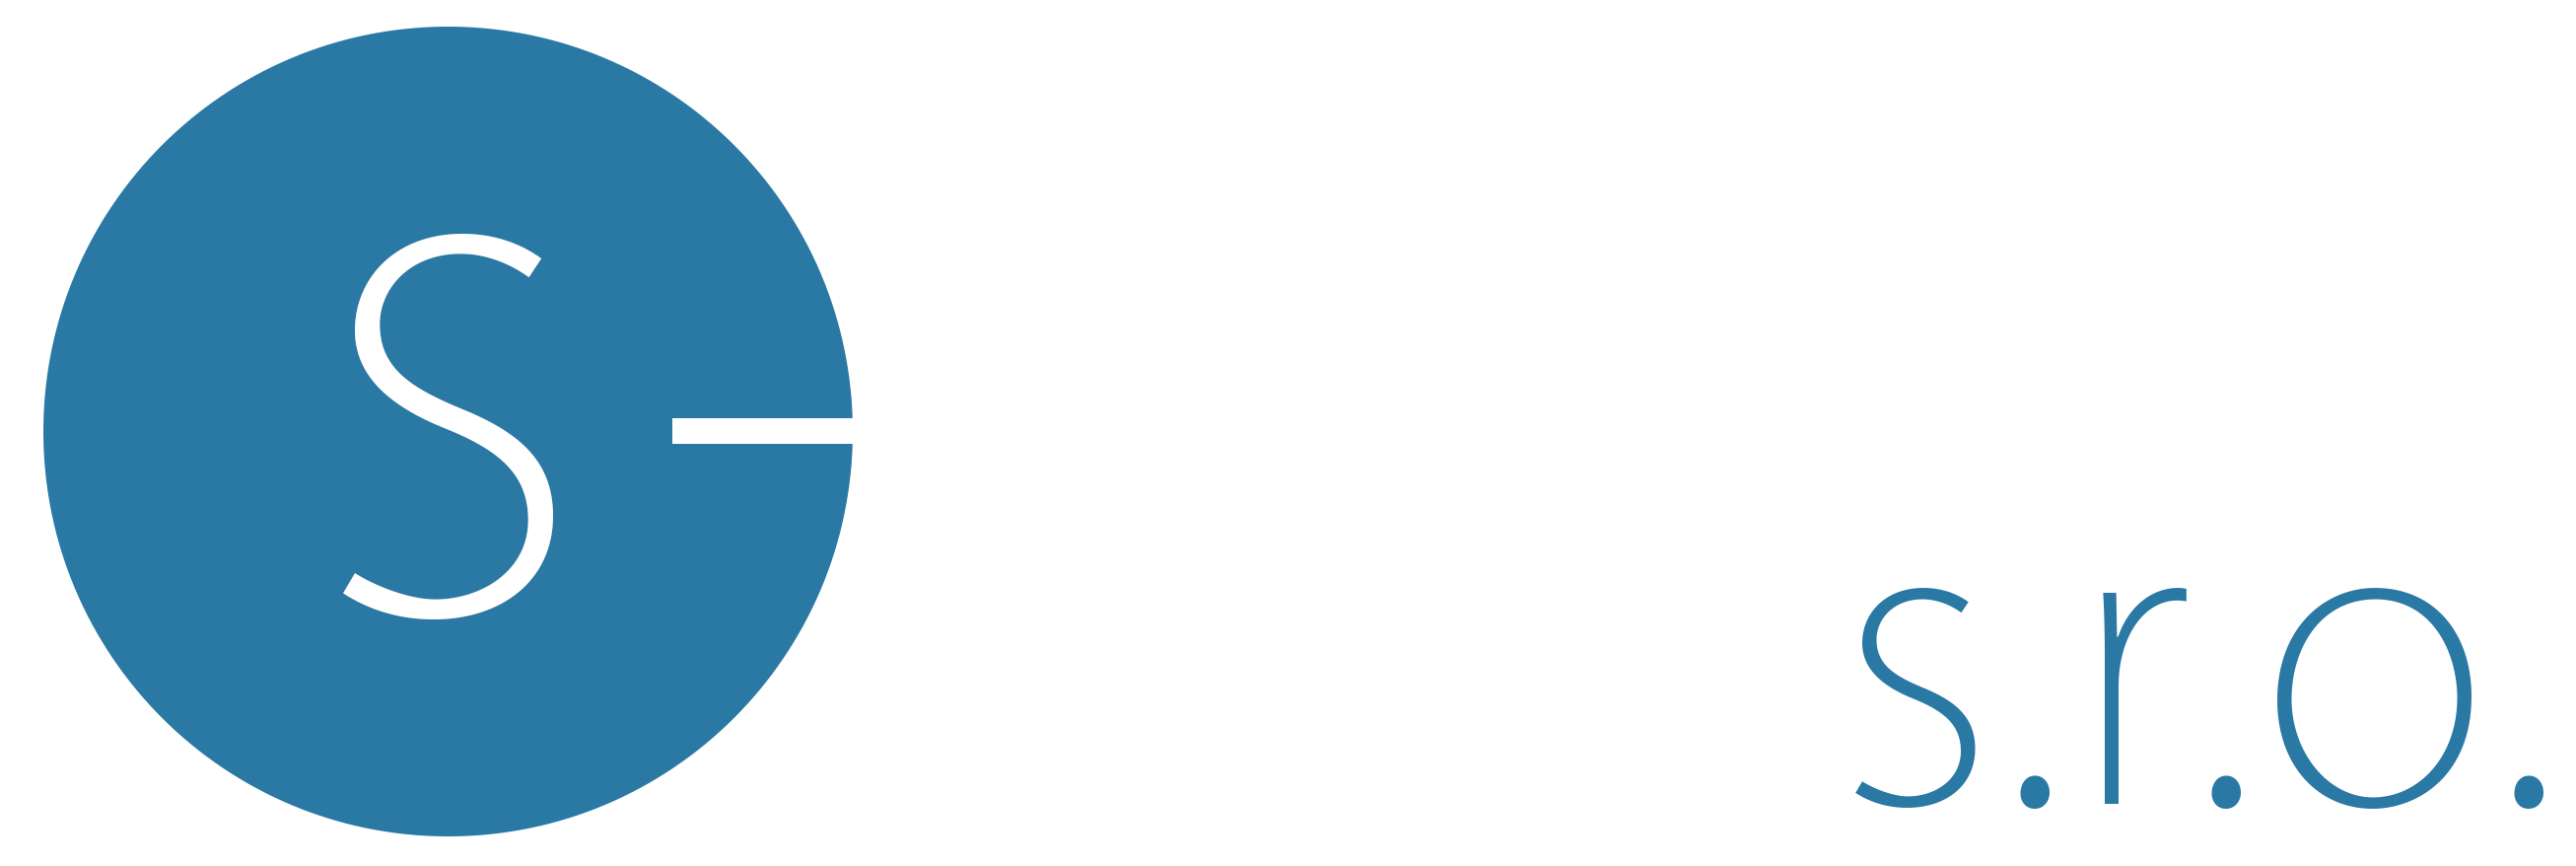 s-music.cz